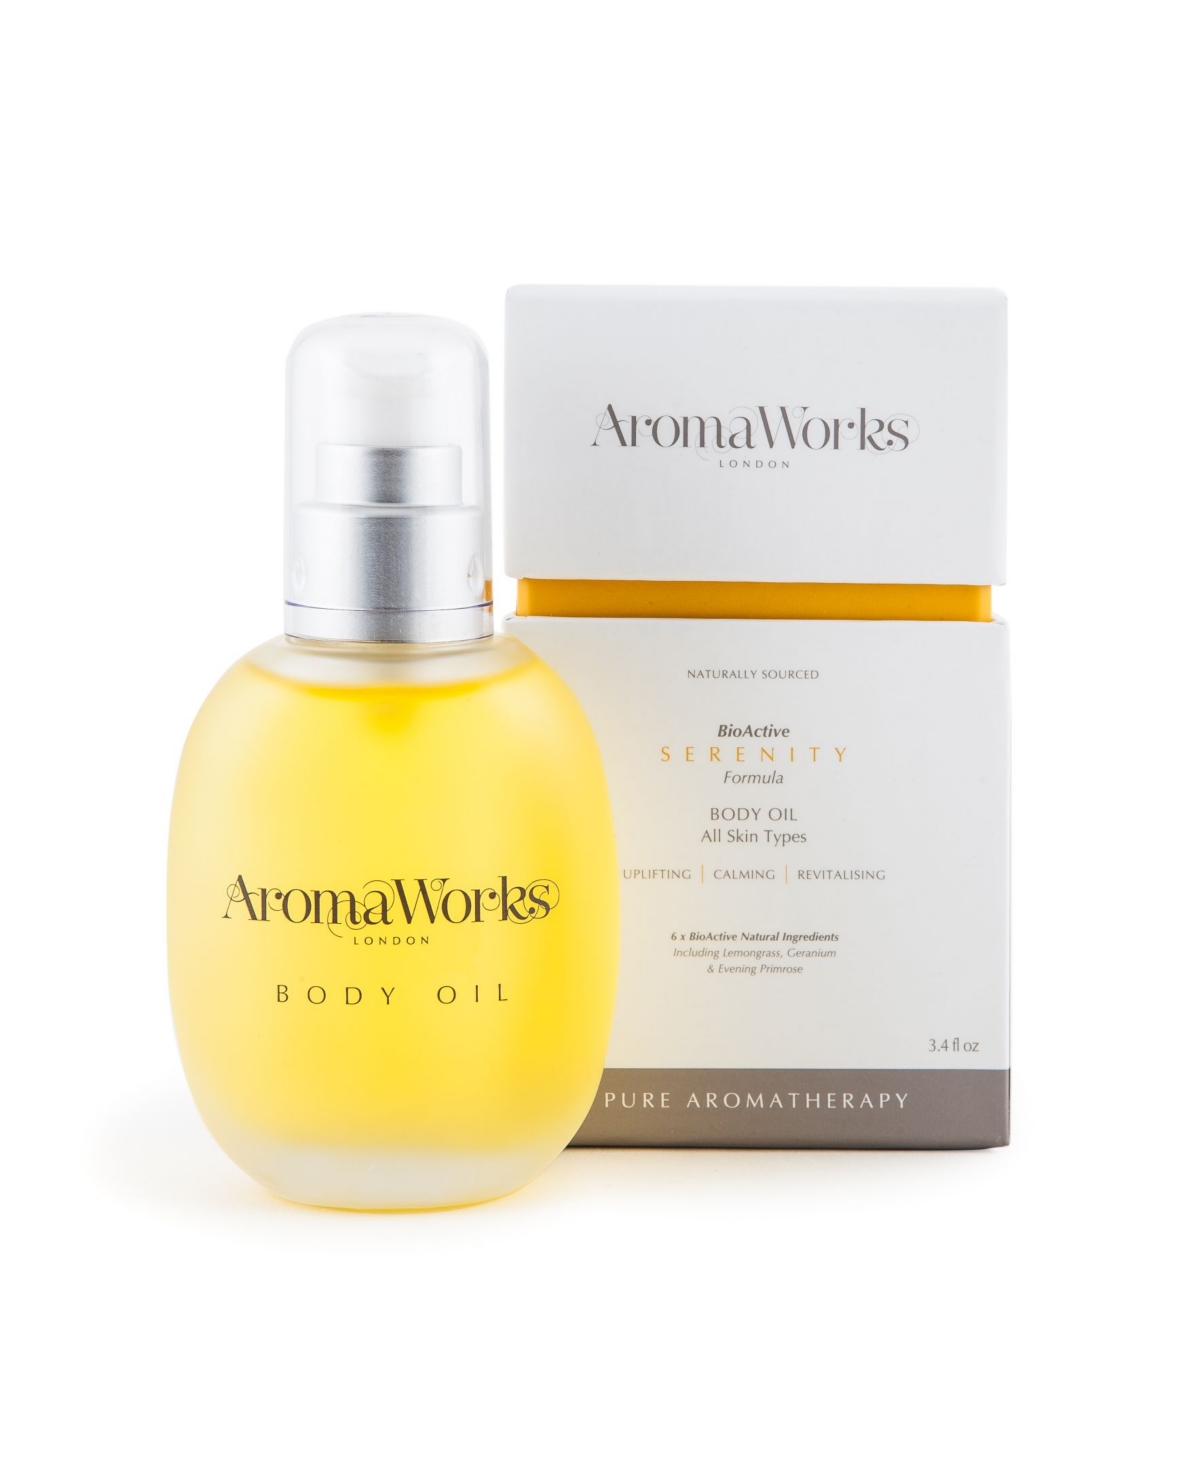 Aromaworks Serenity Body Oil, 3.4 fl oz